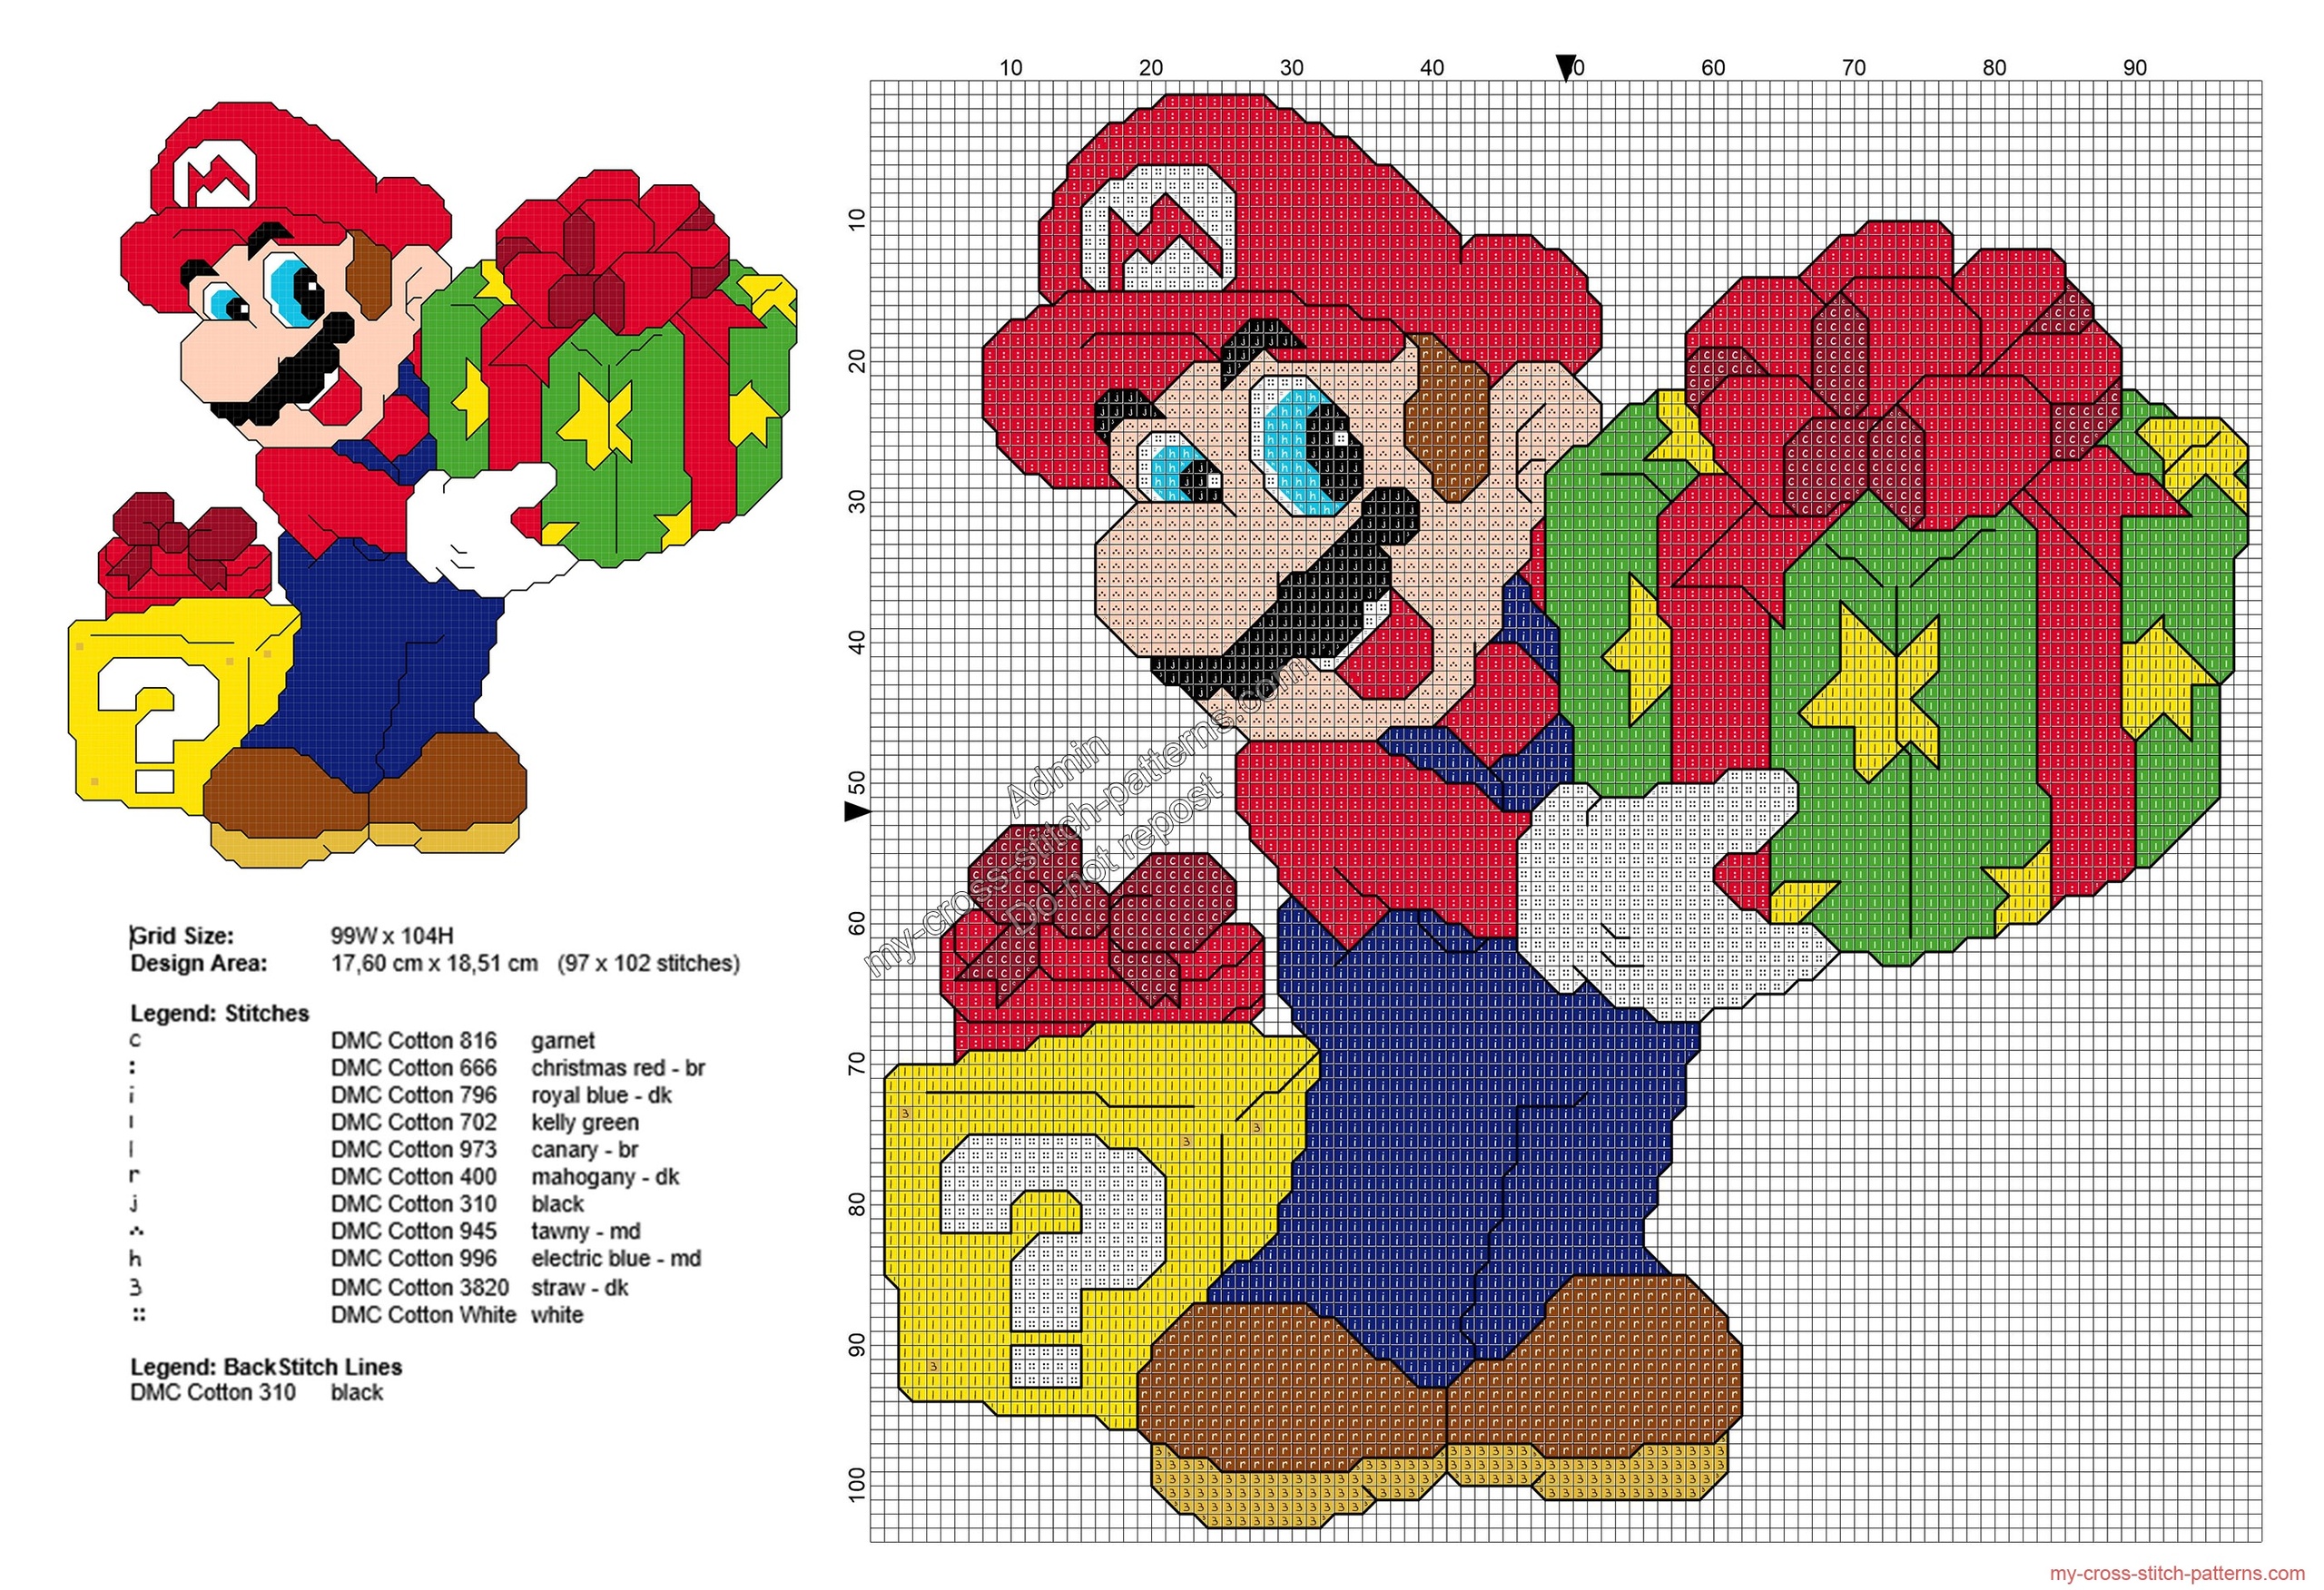 Super Mario Brothers Cross stitch chart pattern